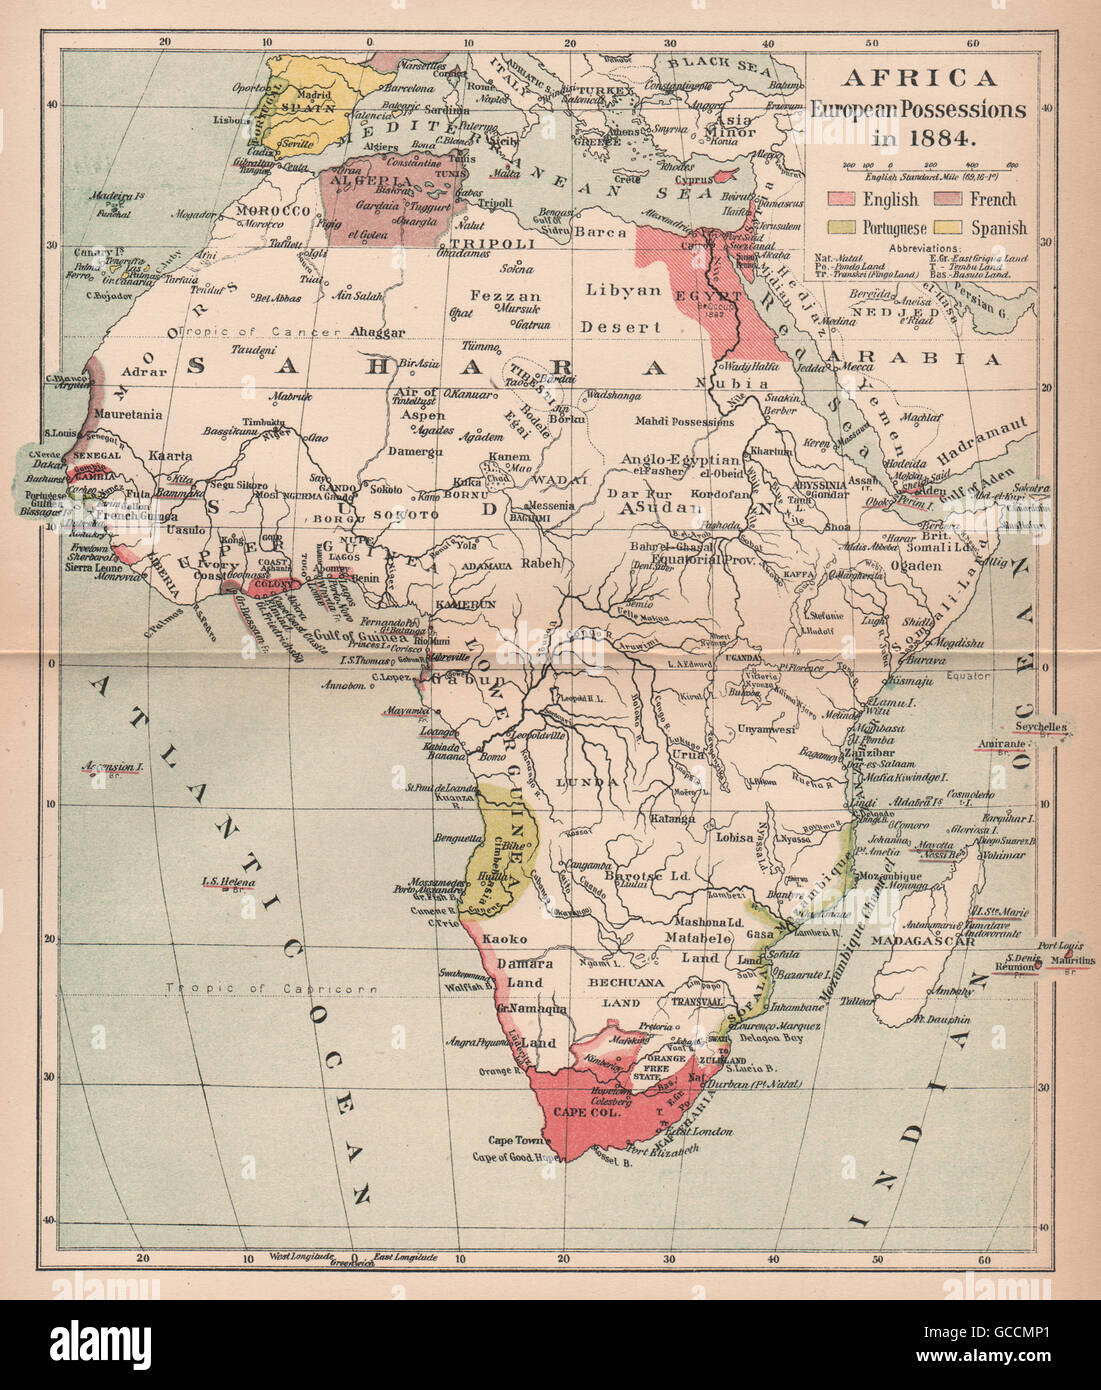 AFRICA 1884. Possedimenti europei colonie. Inglese francese portoghese, 1910 Mappa Foto Stock